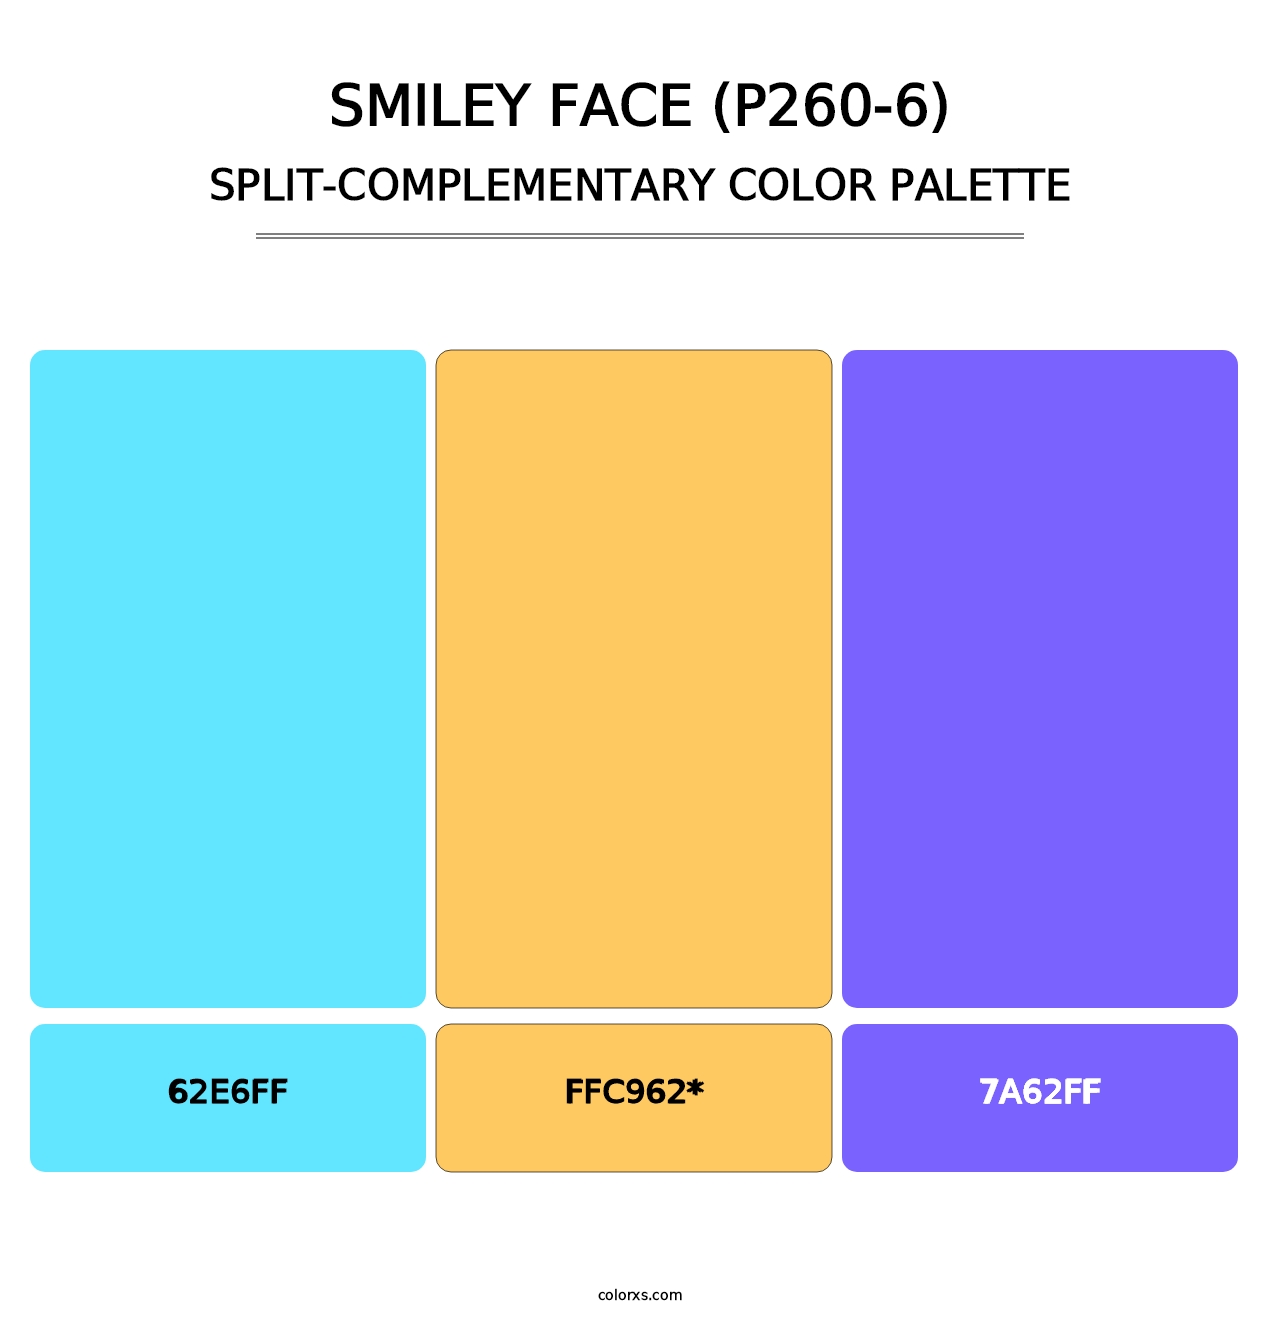 Smiley Face (P260-6) - Split-Complementary Color Palette